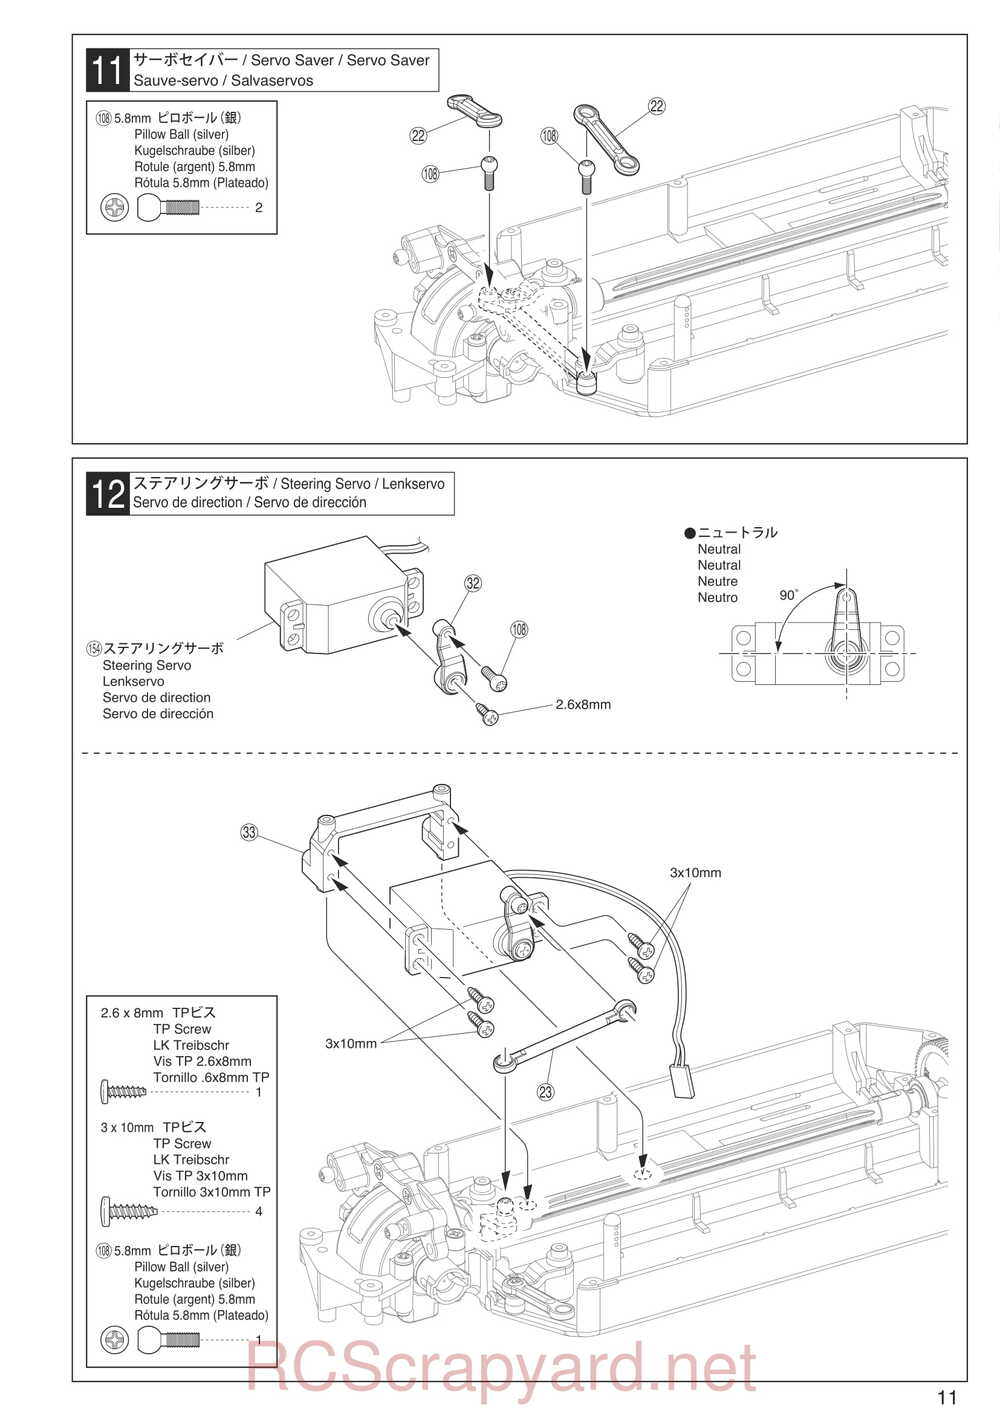 Kyosho - 30912 - EP Fazer Rally - Manual - Page 11